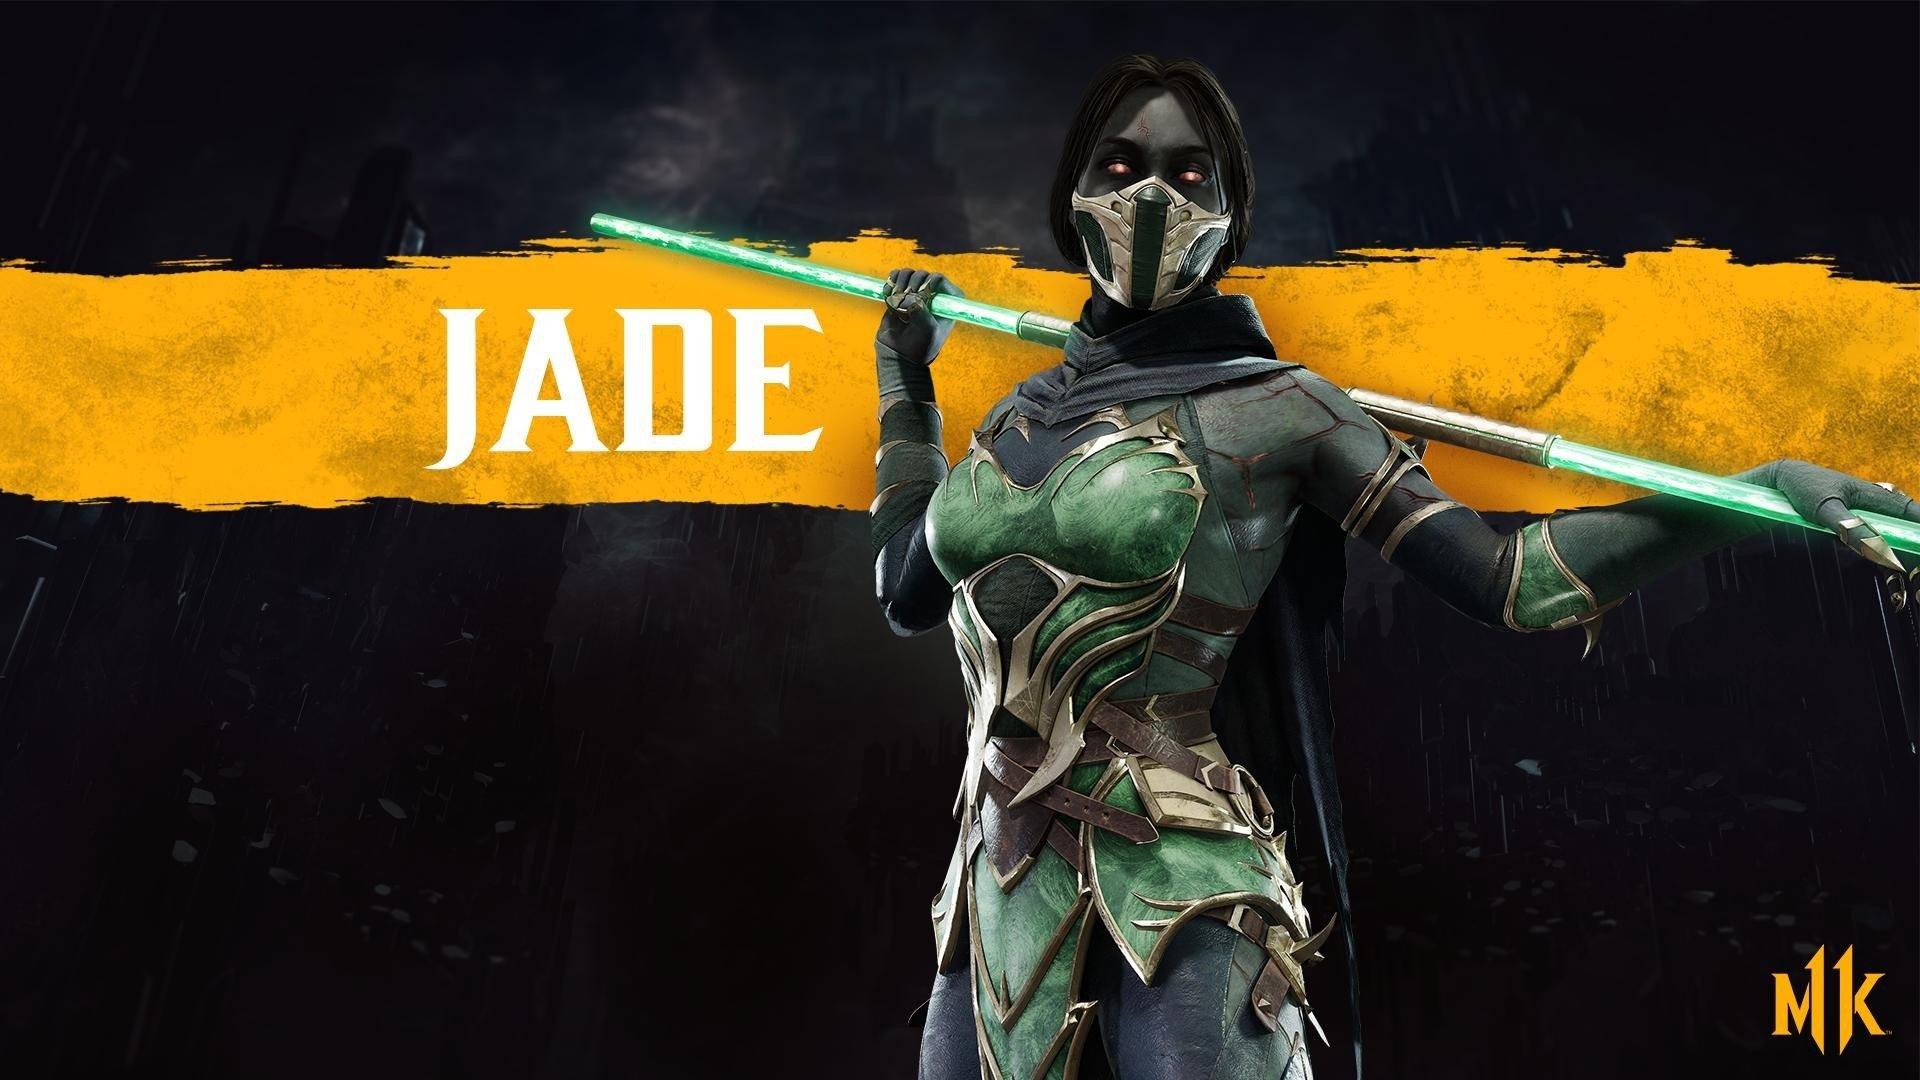 Jade (Mortal Kombat) HD Wallpaper and Background Image